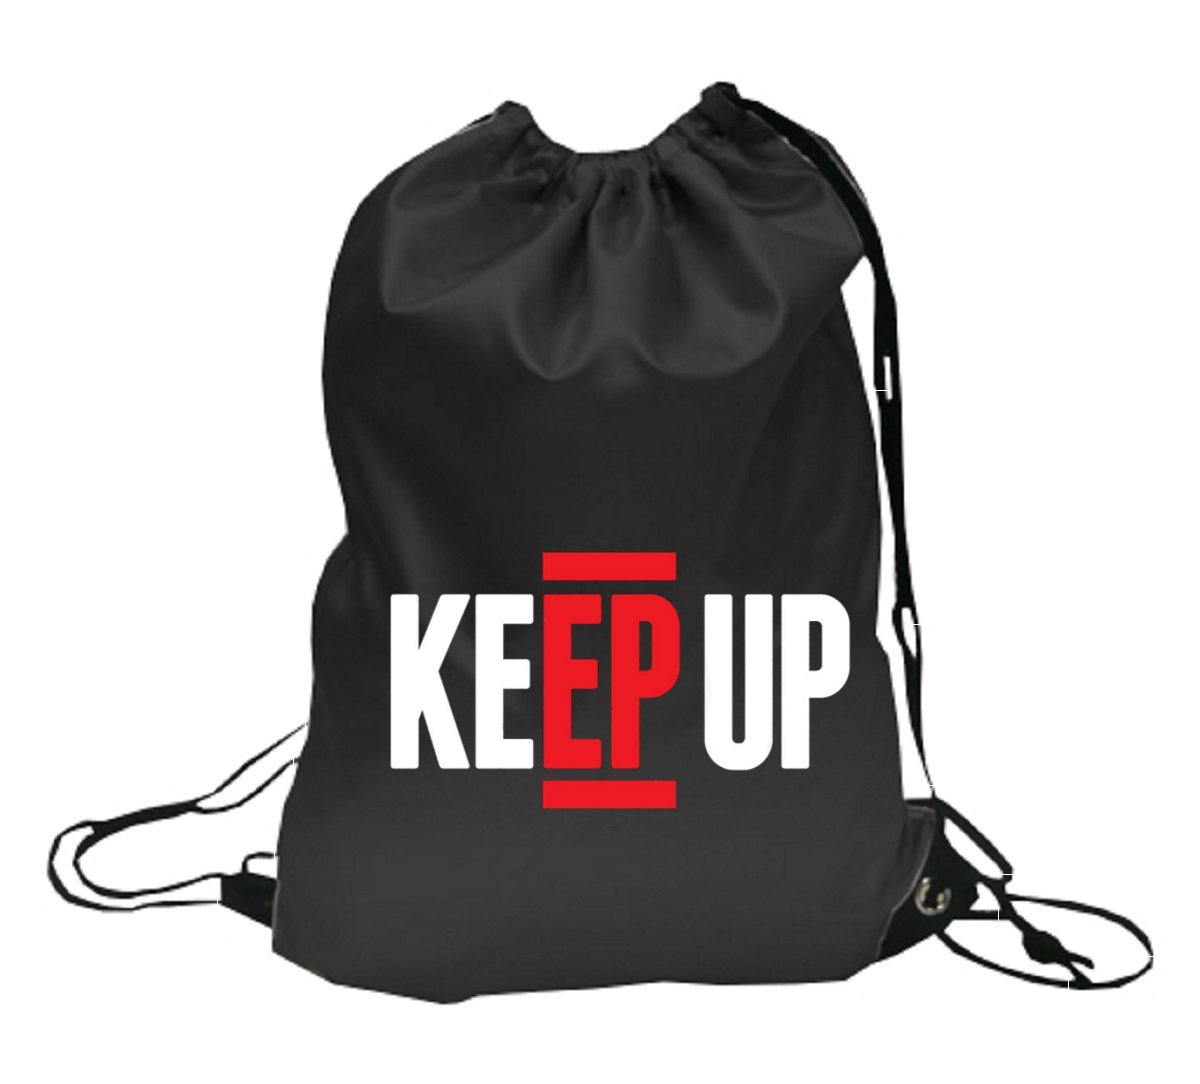 KSI KEEP UP sidemen youtuber Inspired Drawstring Backpack